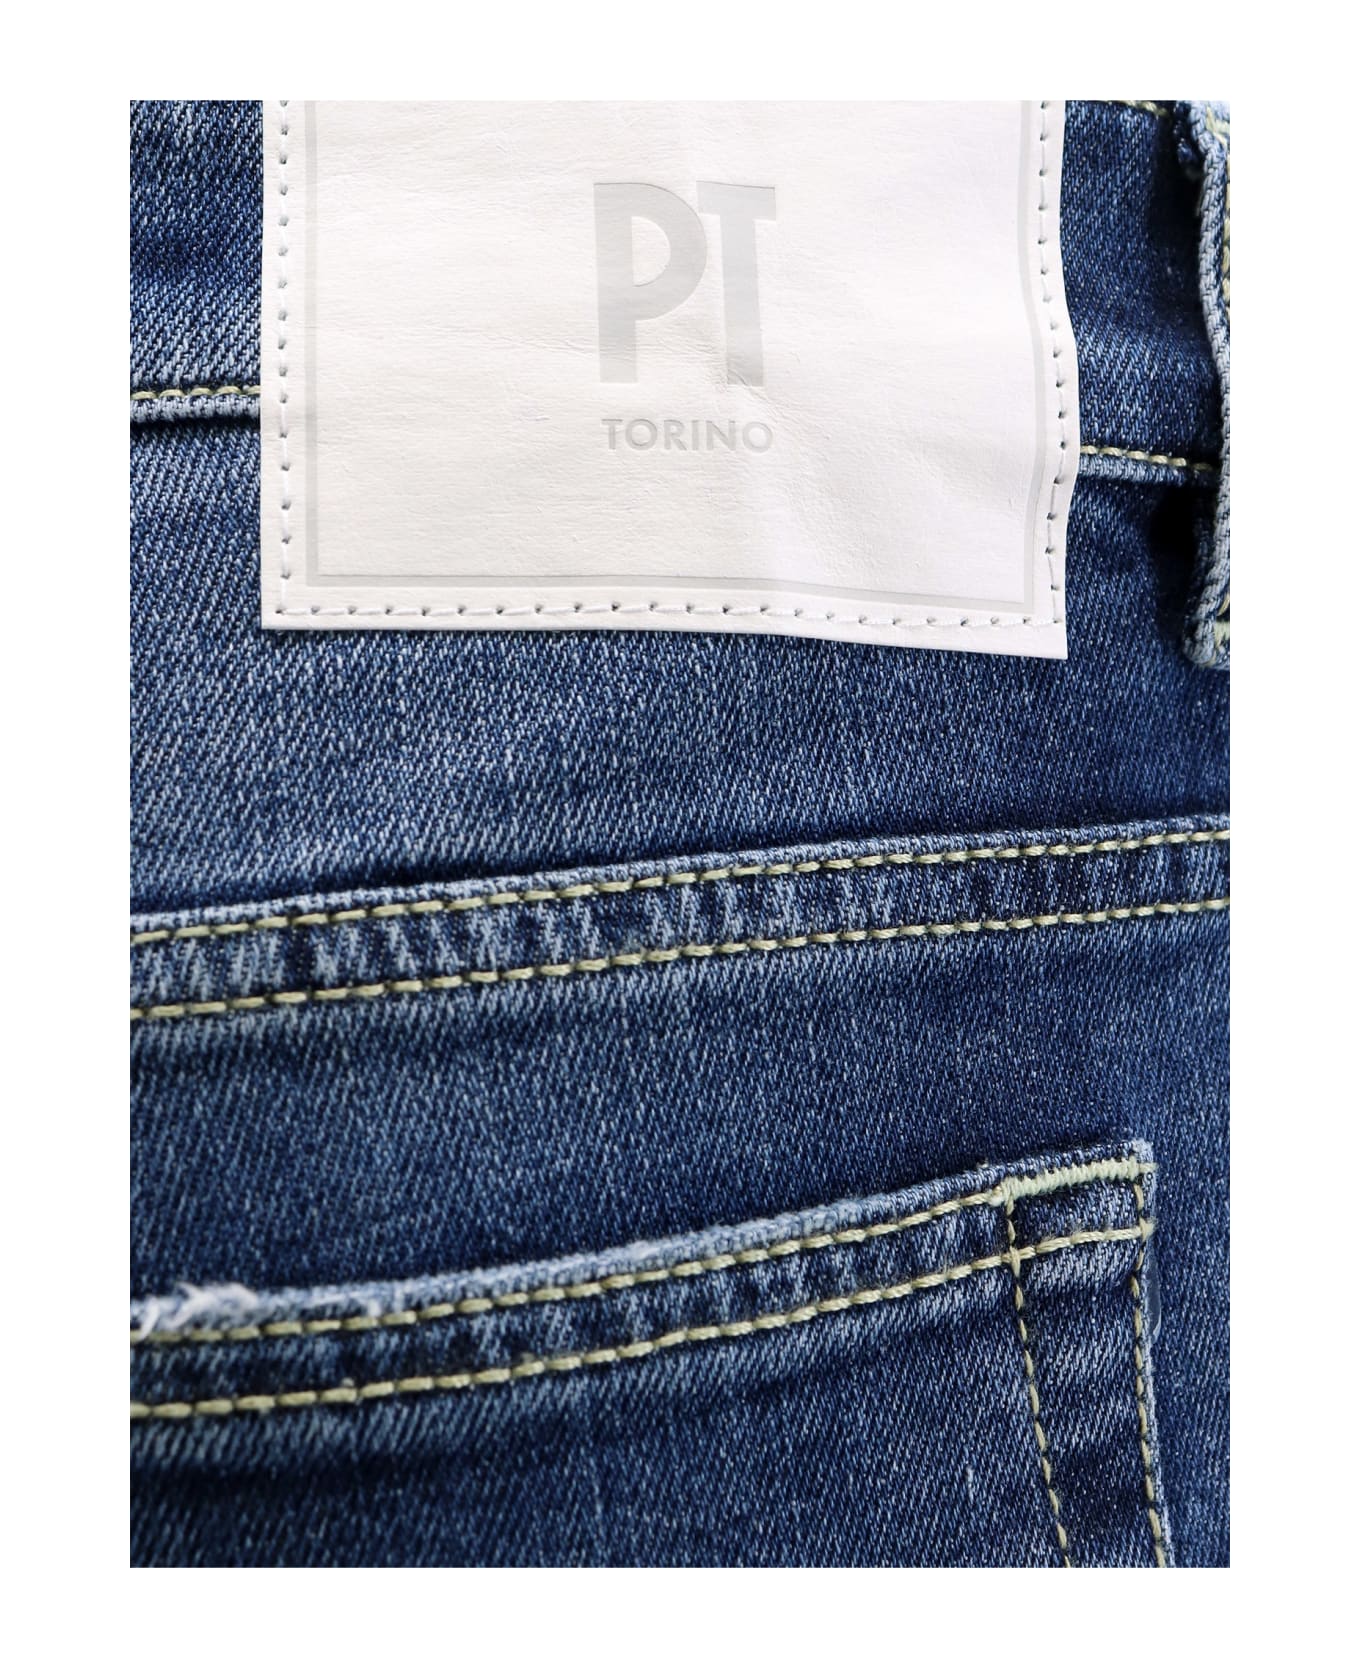 PT Torino Jeans - Denim